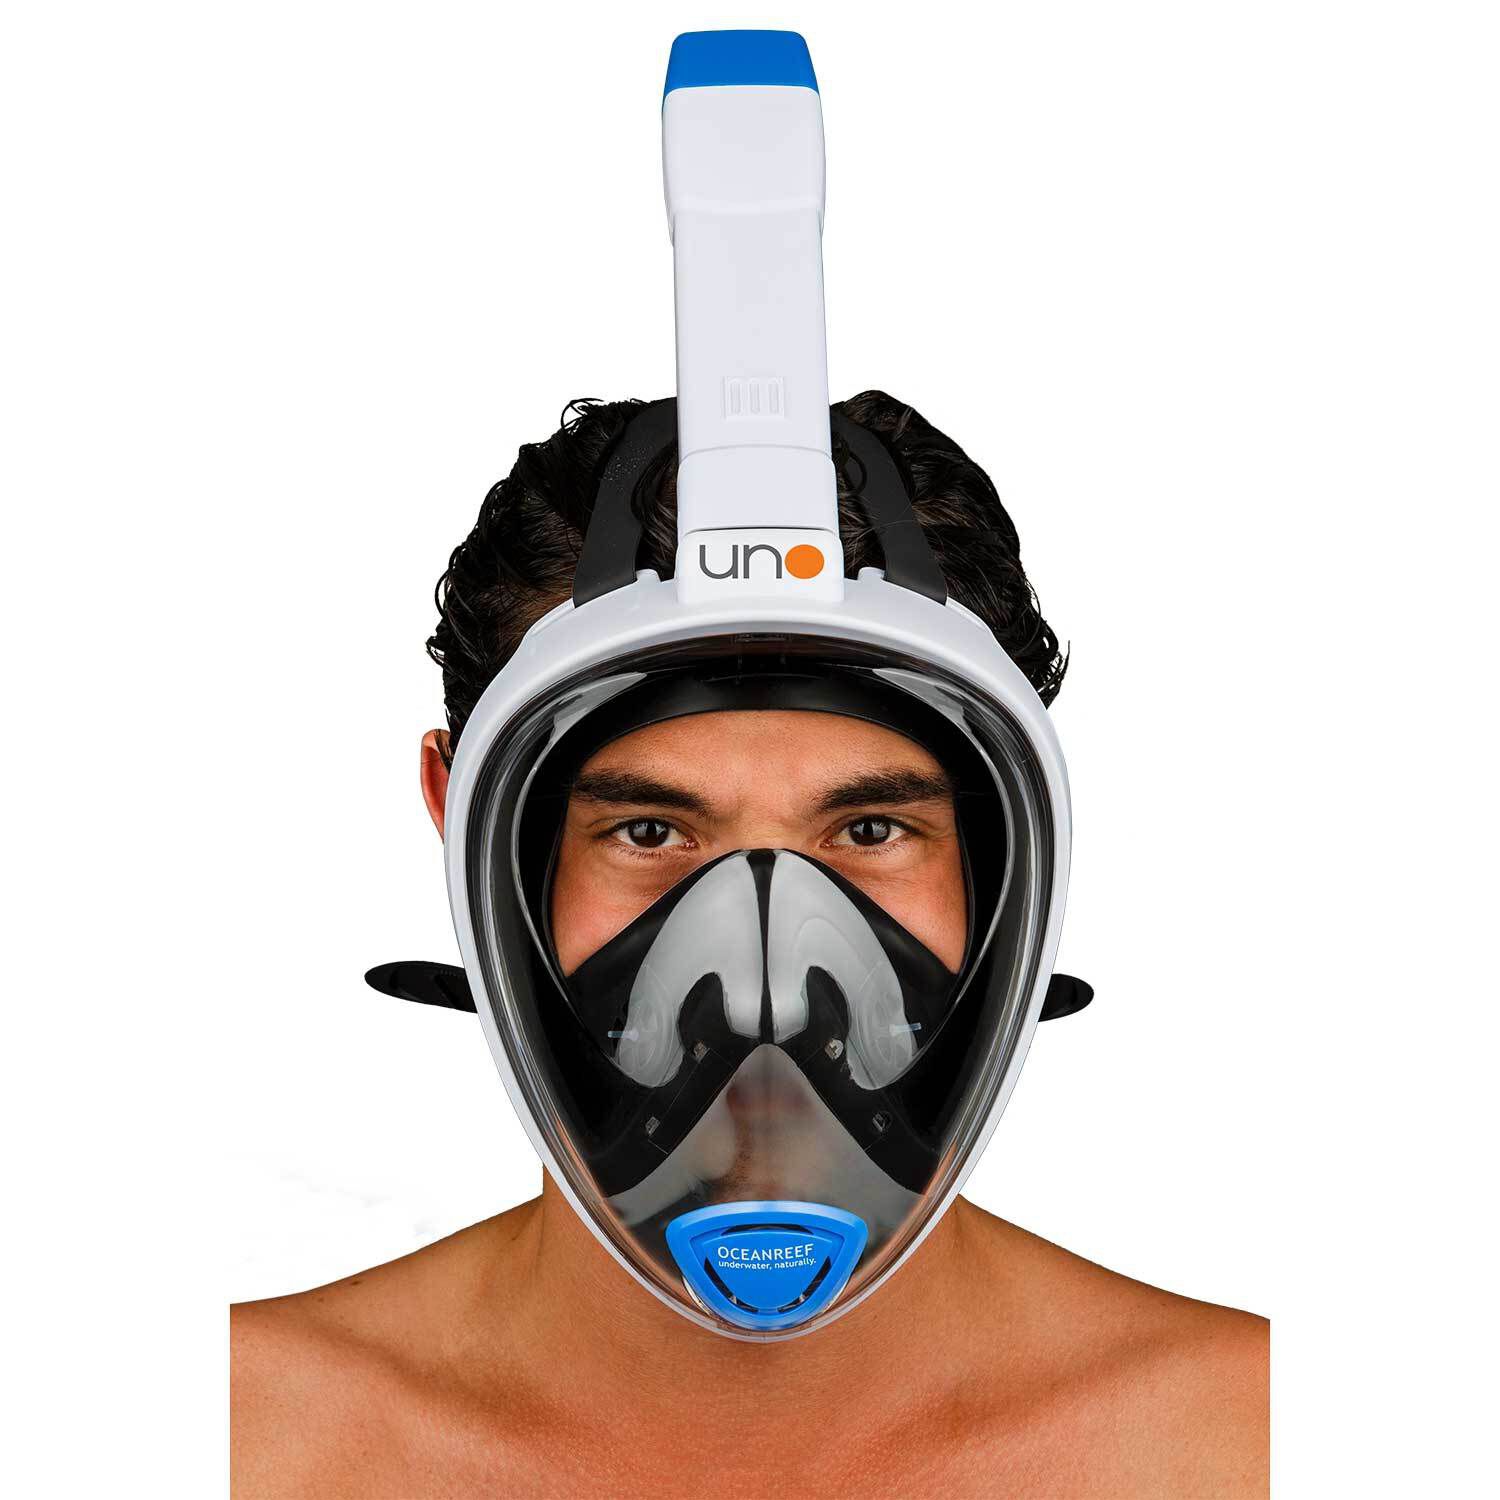 Ocean Reef UNO Full Face Snorkel Mask 